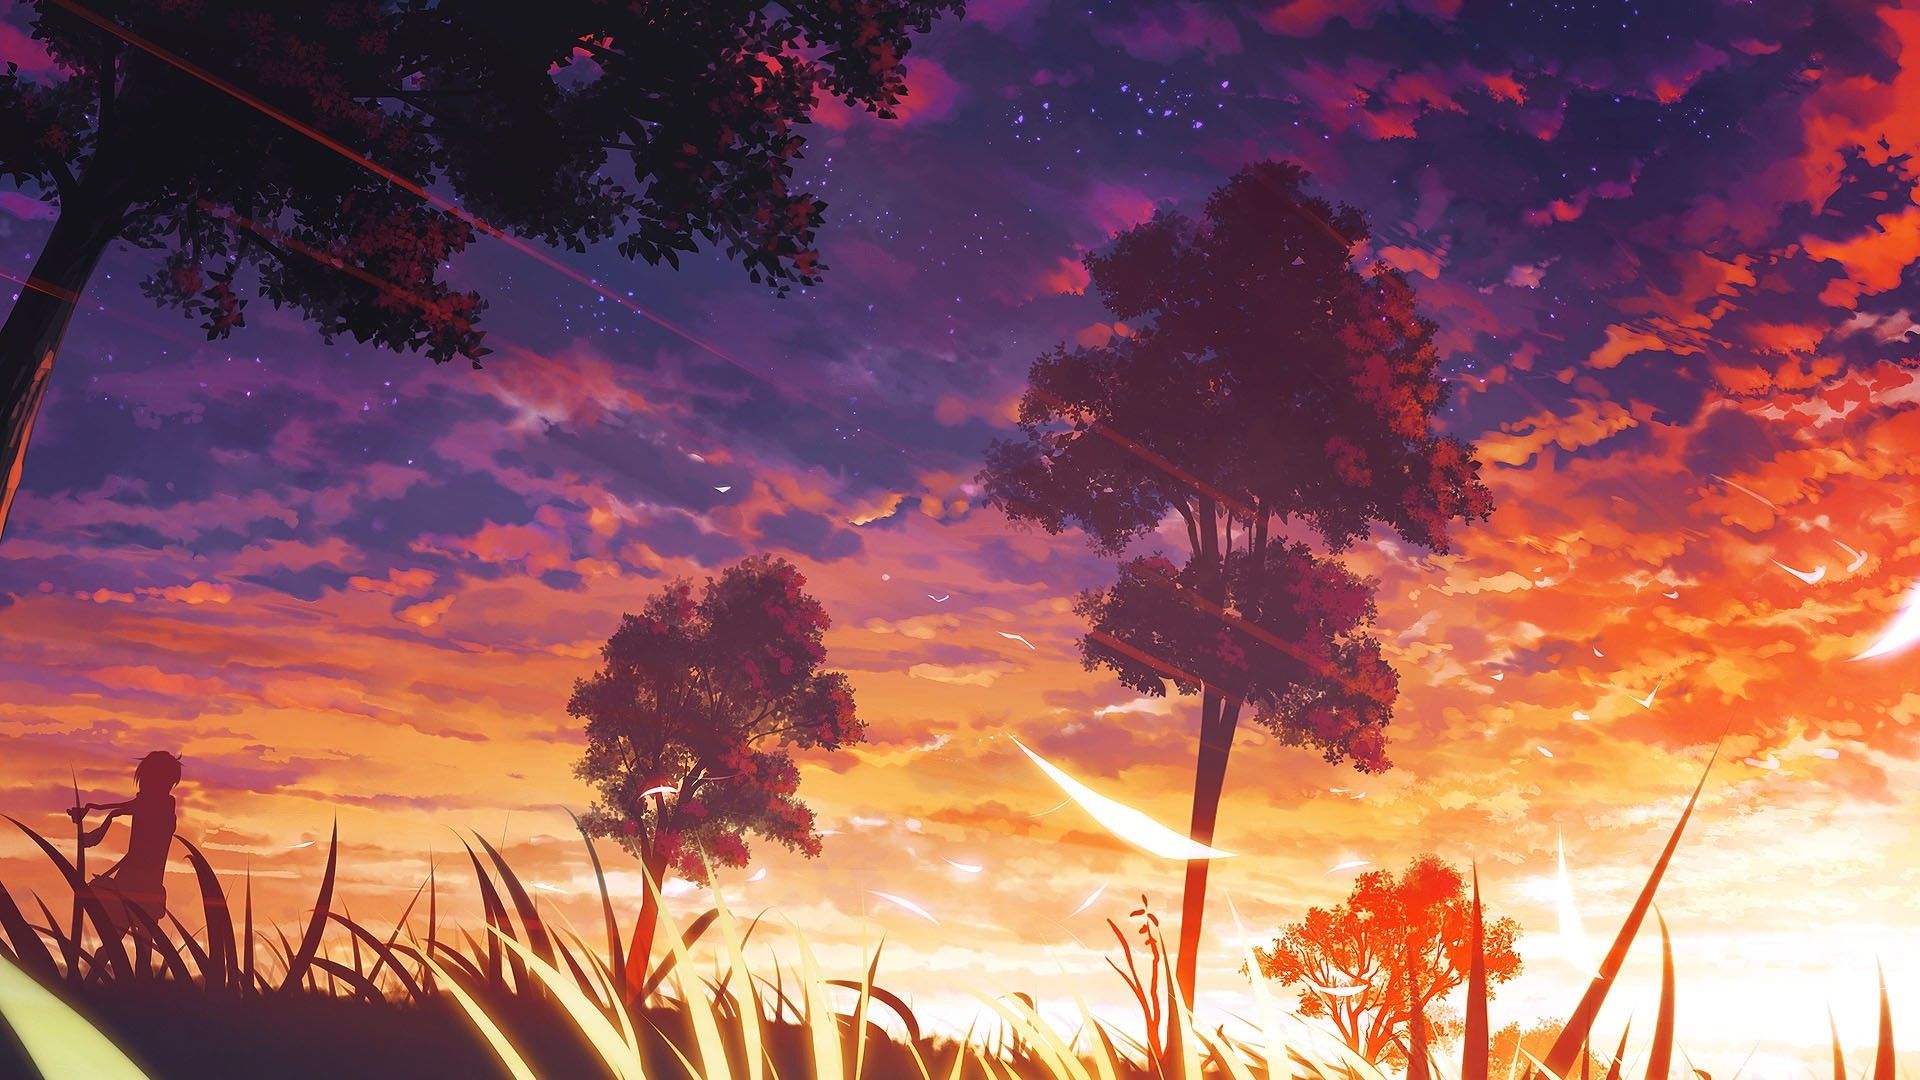 45+] Anime Fall Wallpapers - WallpaperSafari